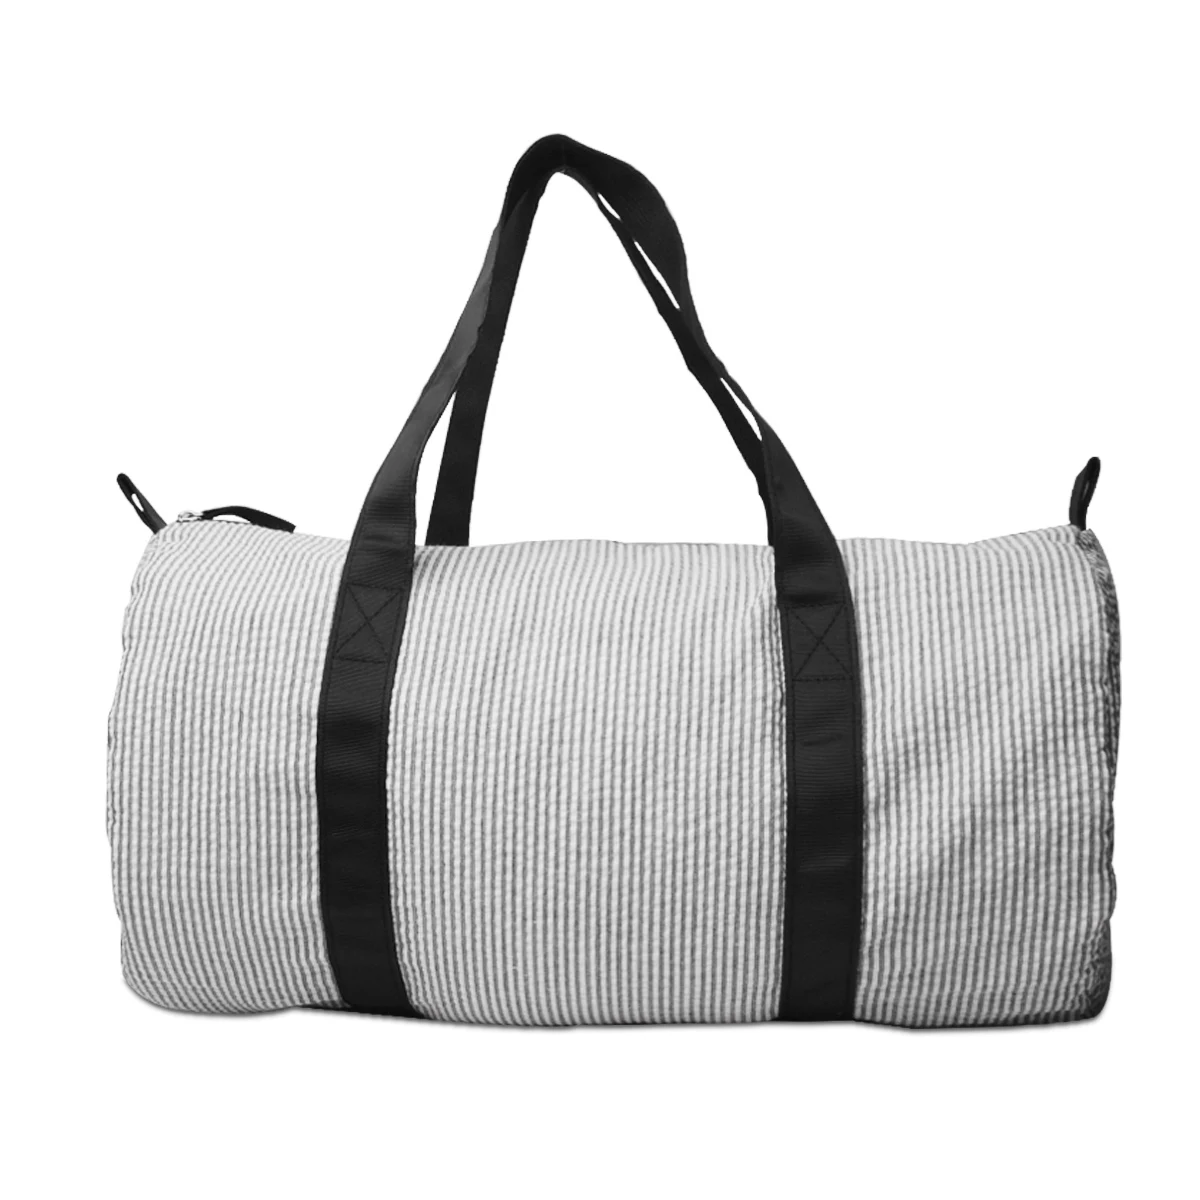 

RTS Domil Black Seersucker Travel Duffel Bag With White Stripes Duffel Bags Shoulder Weekender Overnight Bag DOM112-1494, Pink navy black grey